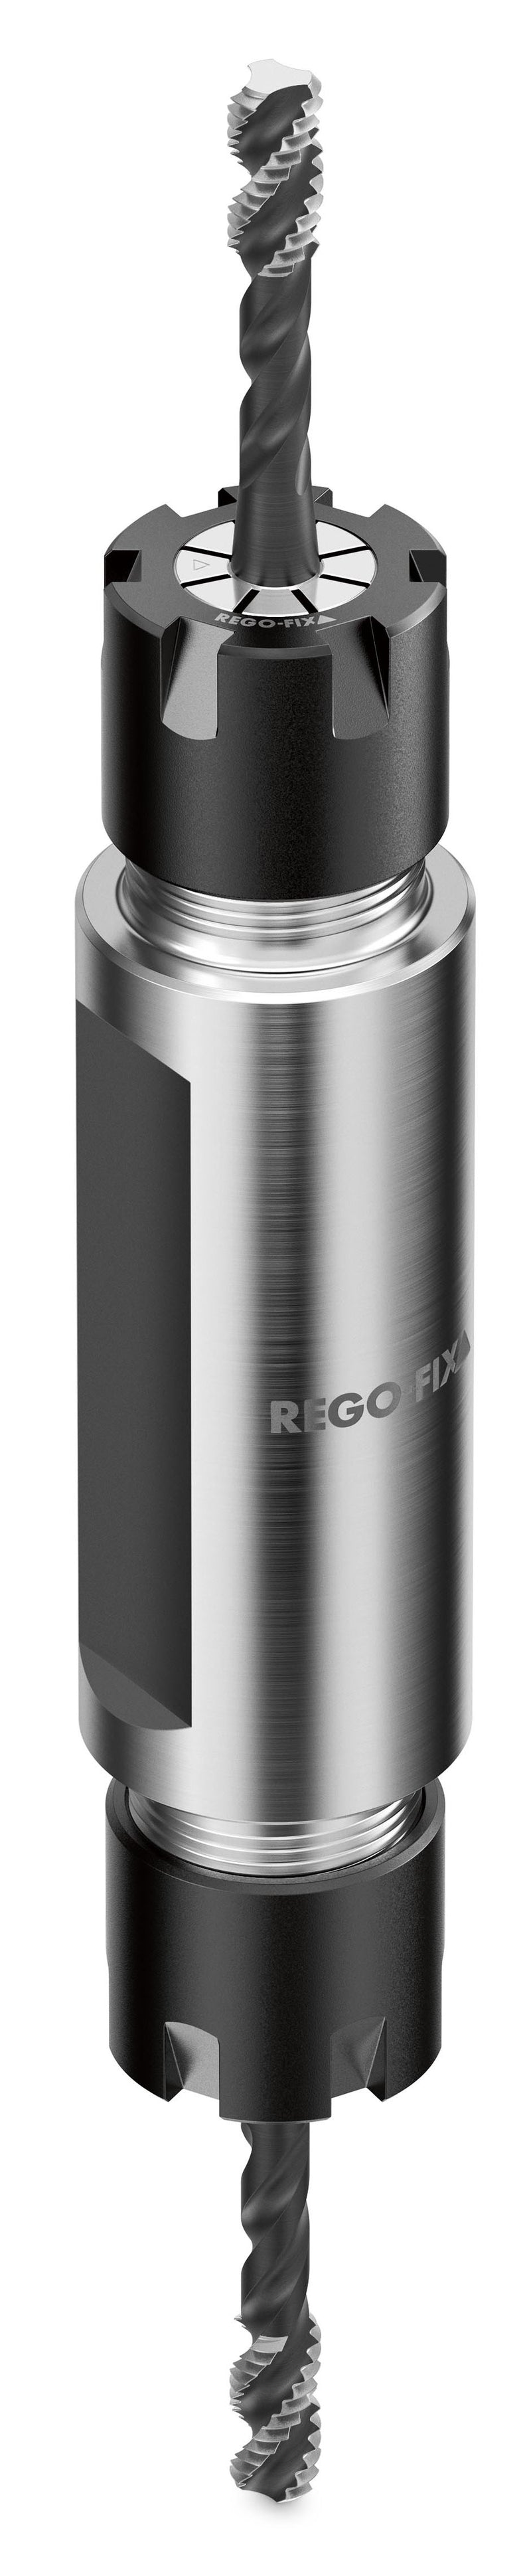 Rego-Fix CYDF 20 x 055/ERMX 16 Tool Holder 4620.21634 (0647890)